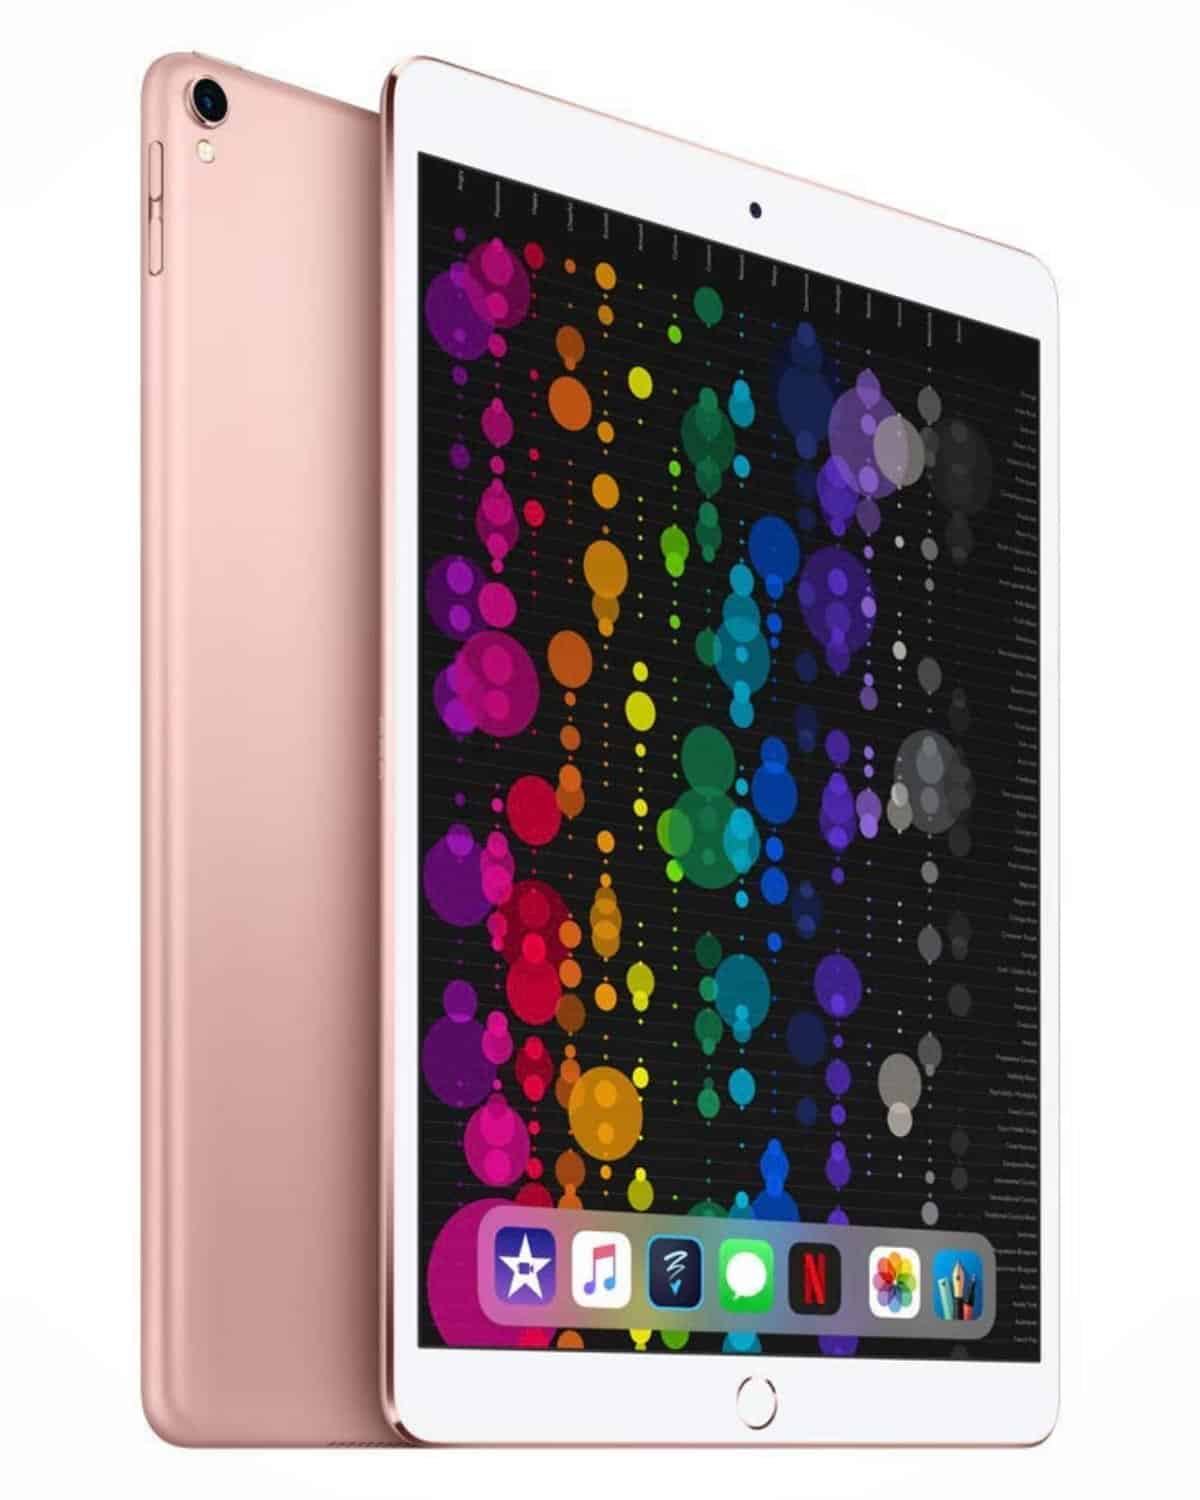 iPad Pro (10.5-inch) - 2017 model | The New Apple iPad Lineup